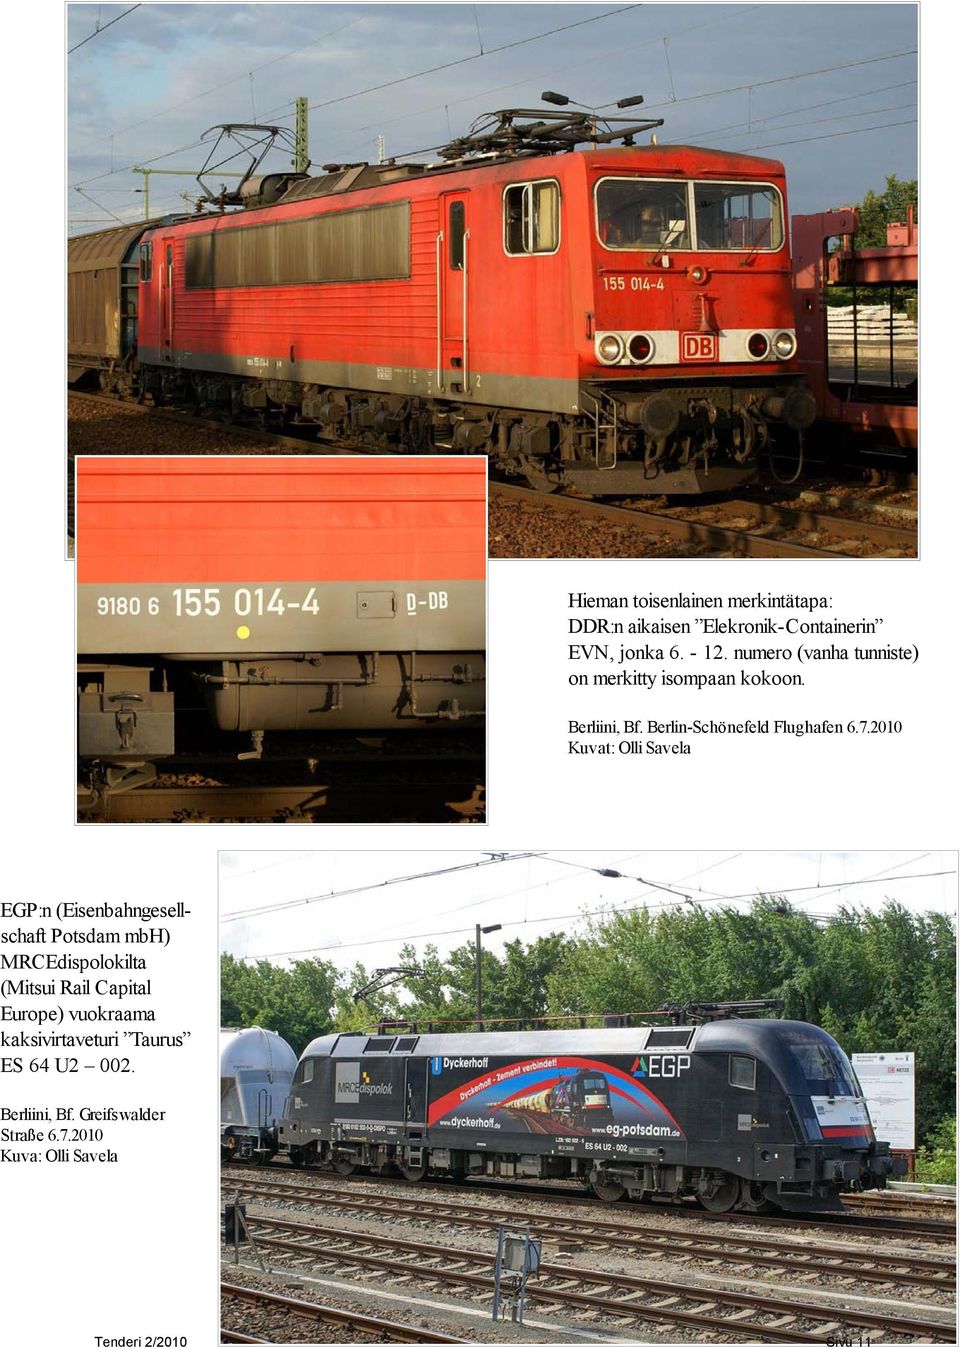 2010 Kuvat: Olli Savela EGP:n (Eisenbahngesellschaft Potsdam mbh) MRCEdispolokilta (Mitsui Rail Capital